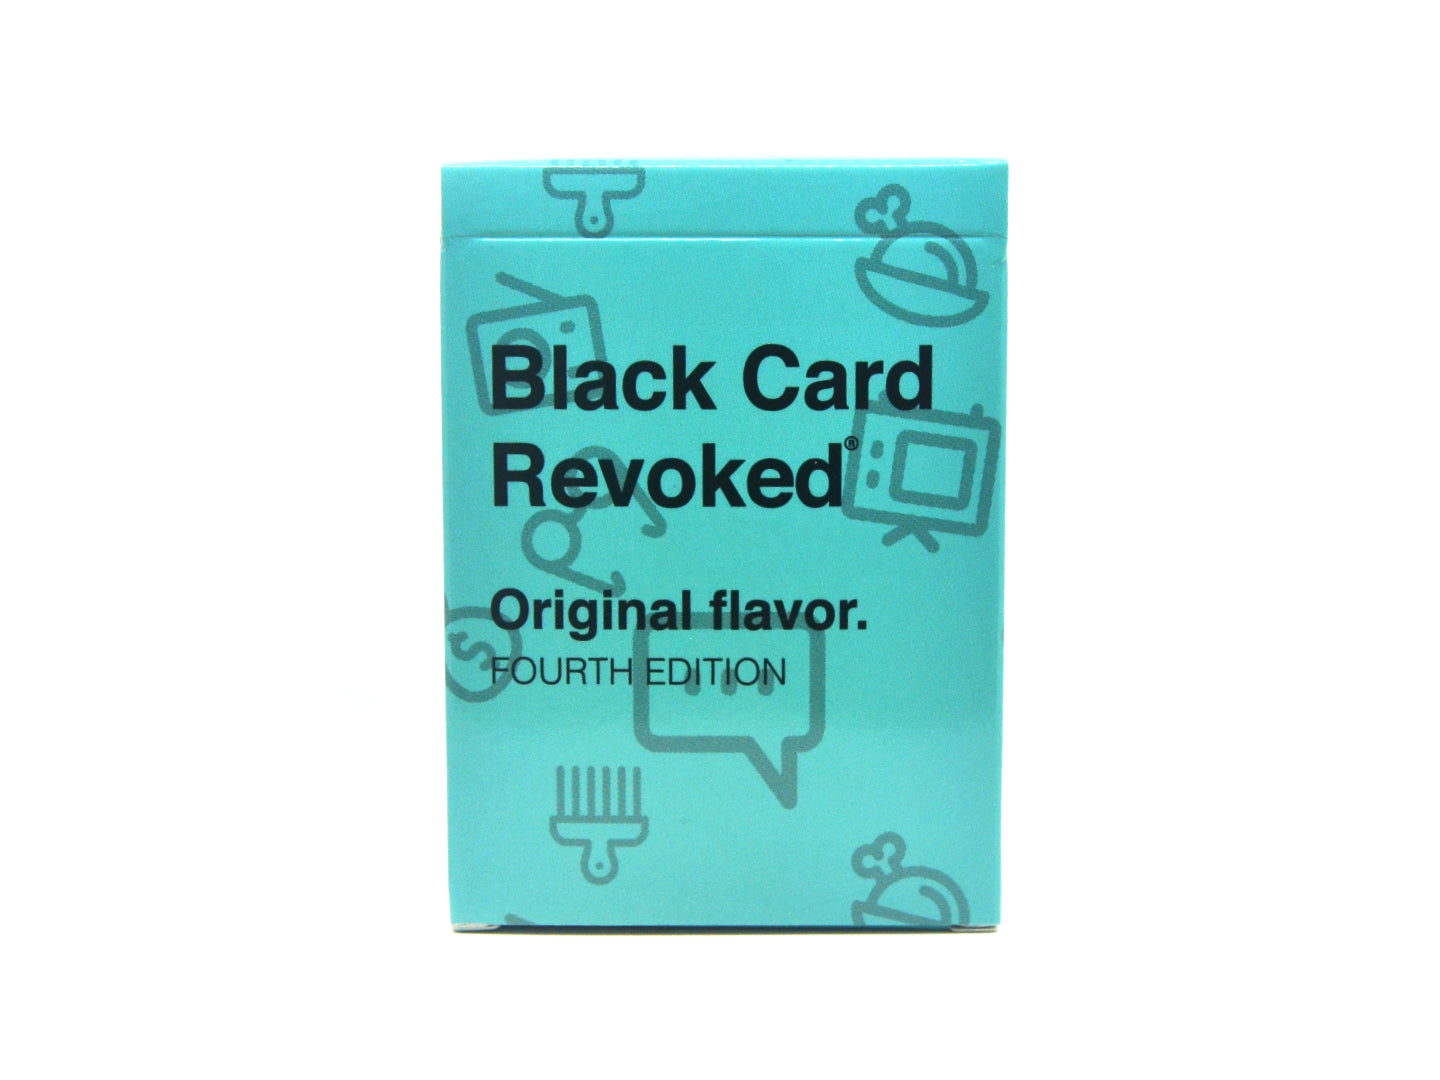 I Played Black Card Revoked Yesterday; I'm No Longer Black